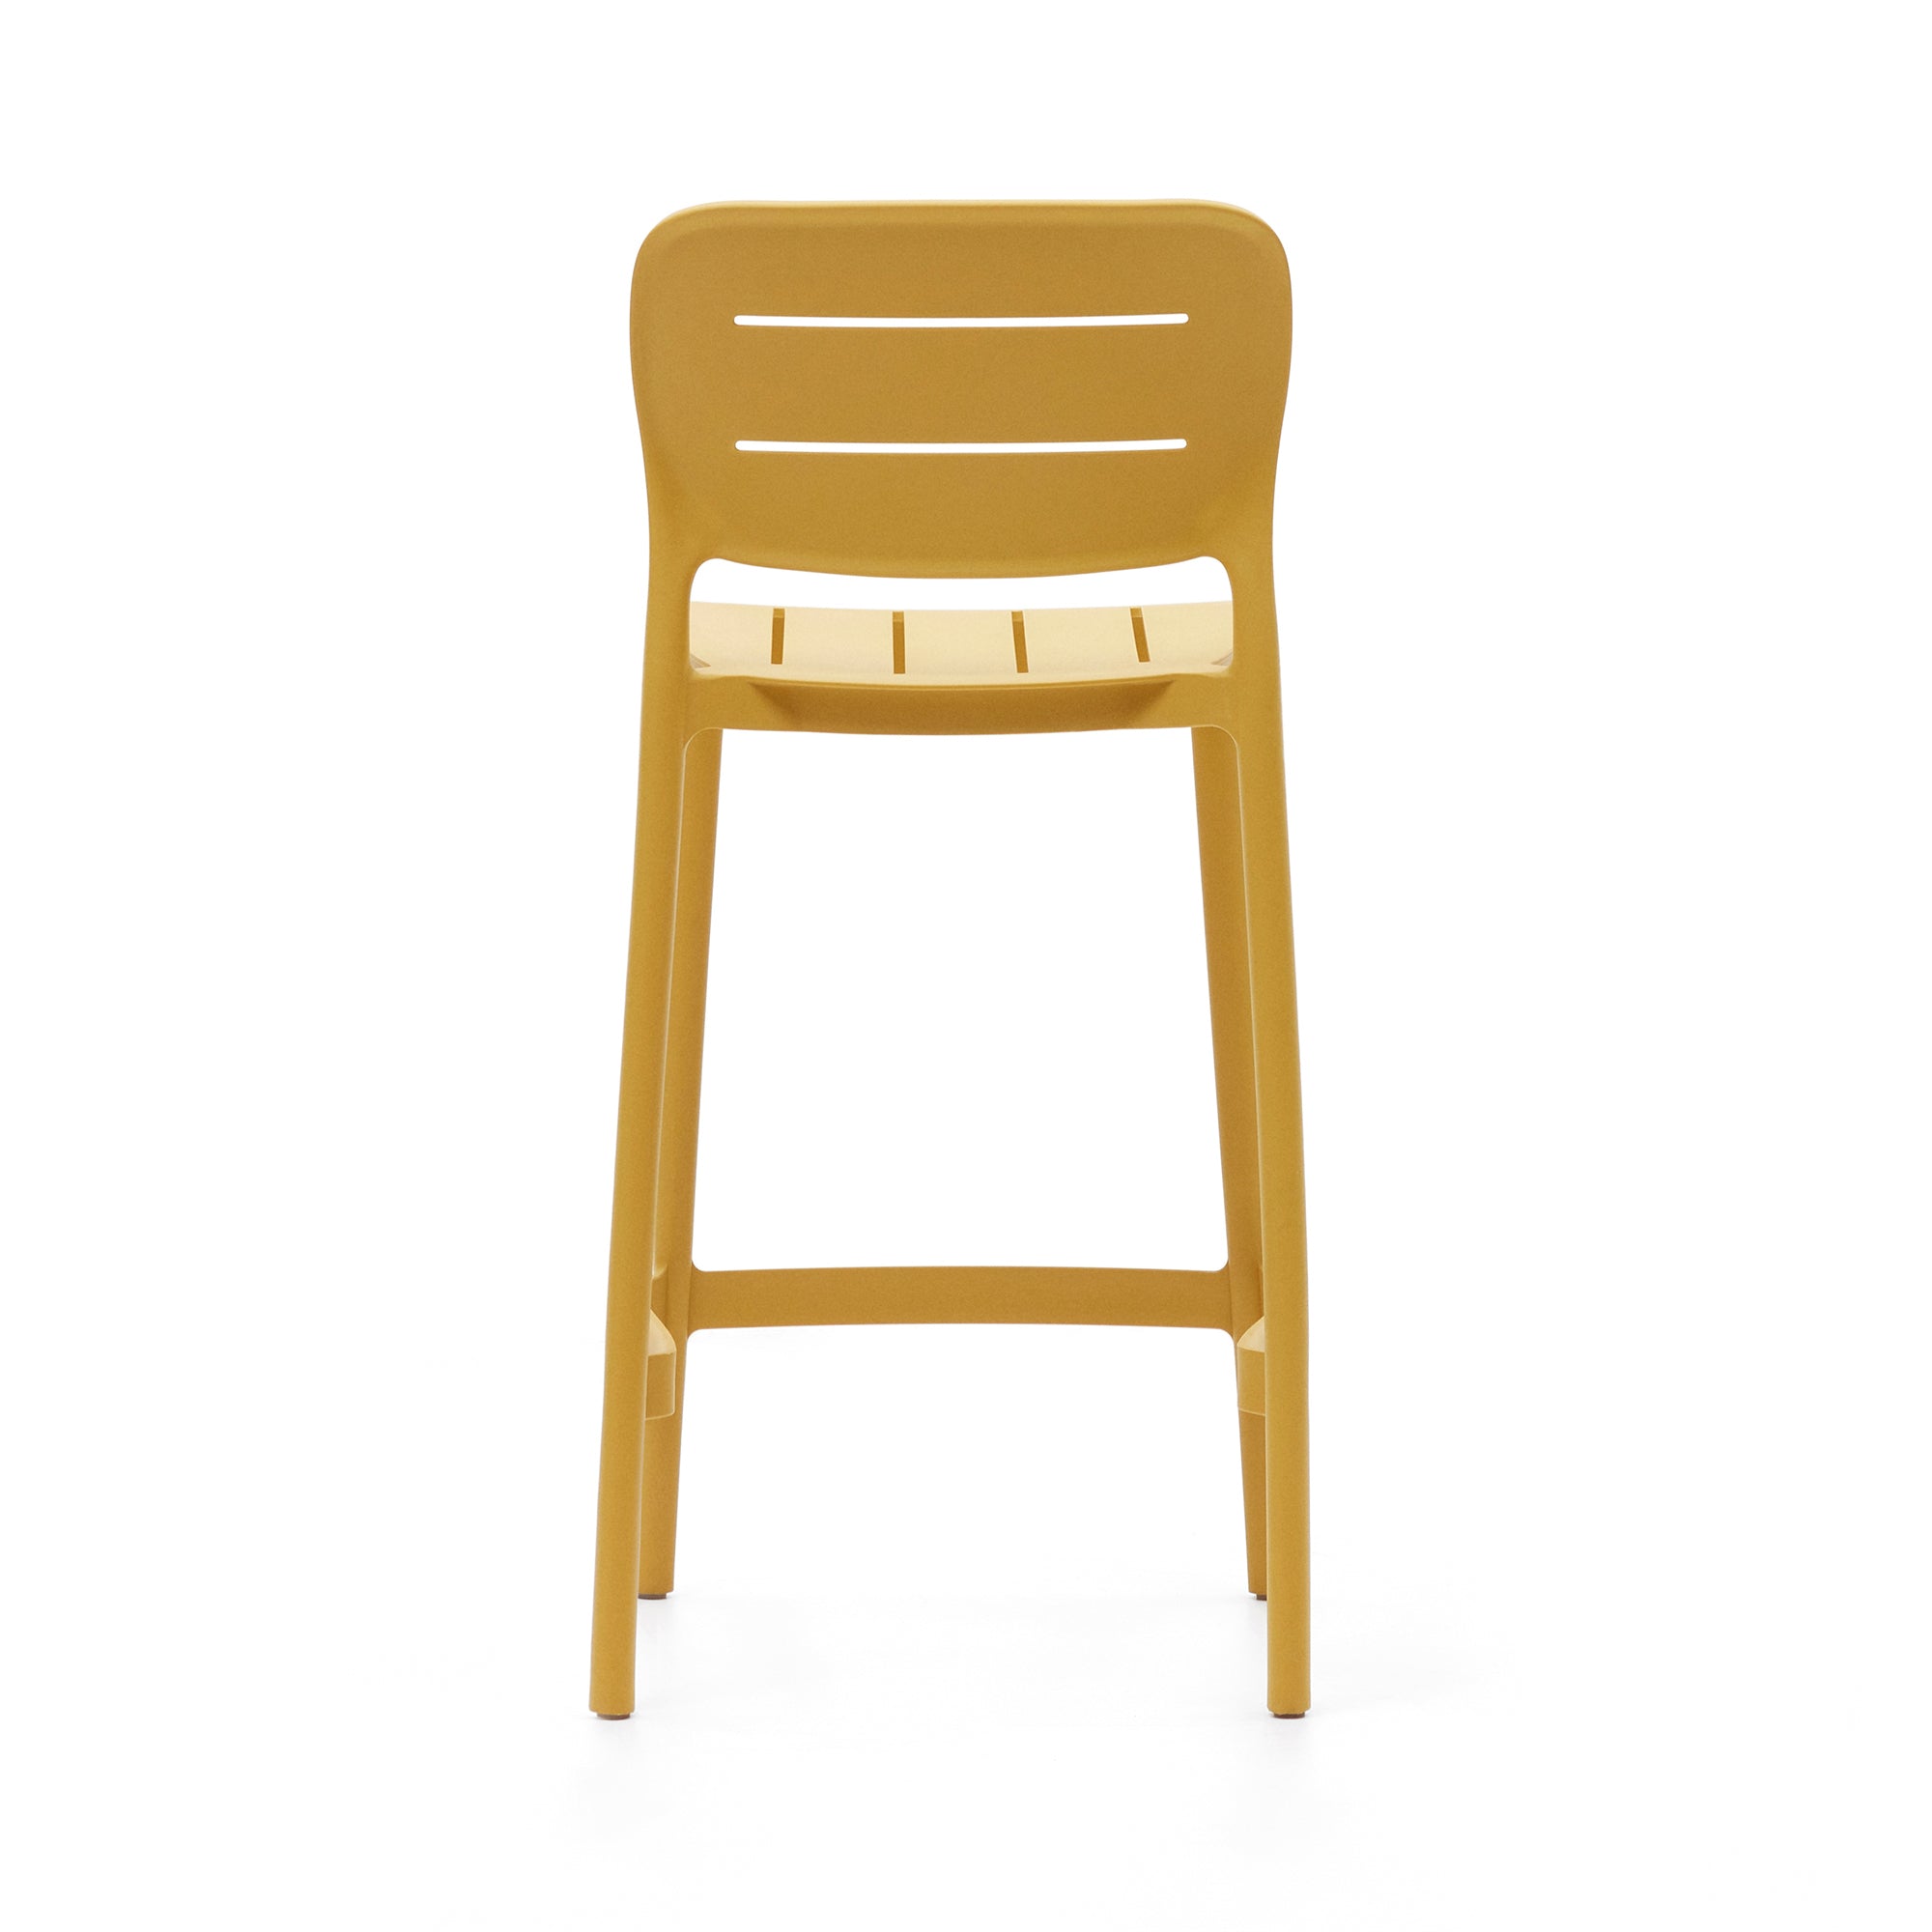 Morella stackable outdoor stool in mustard, 65 cm in height